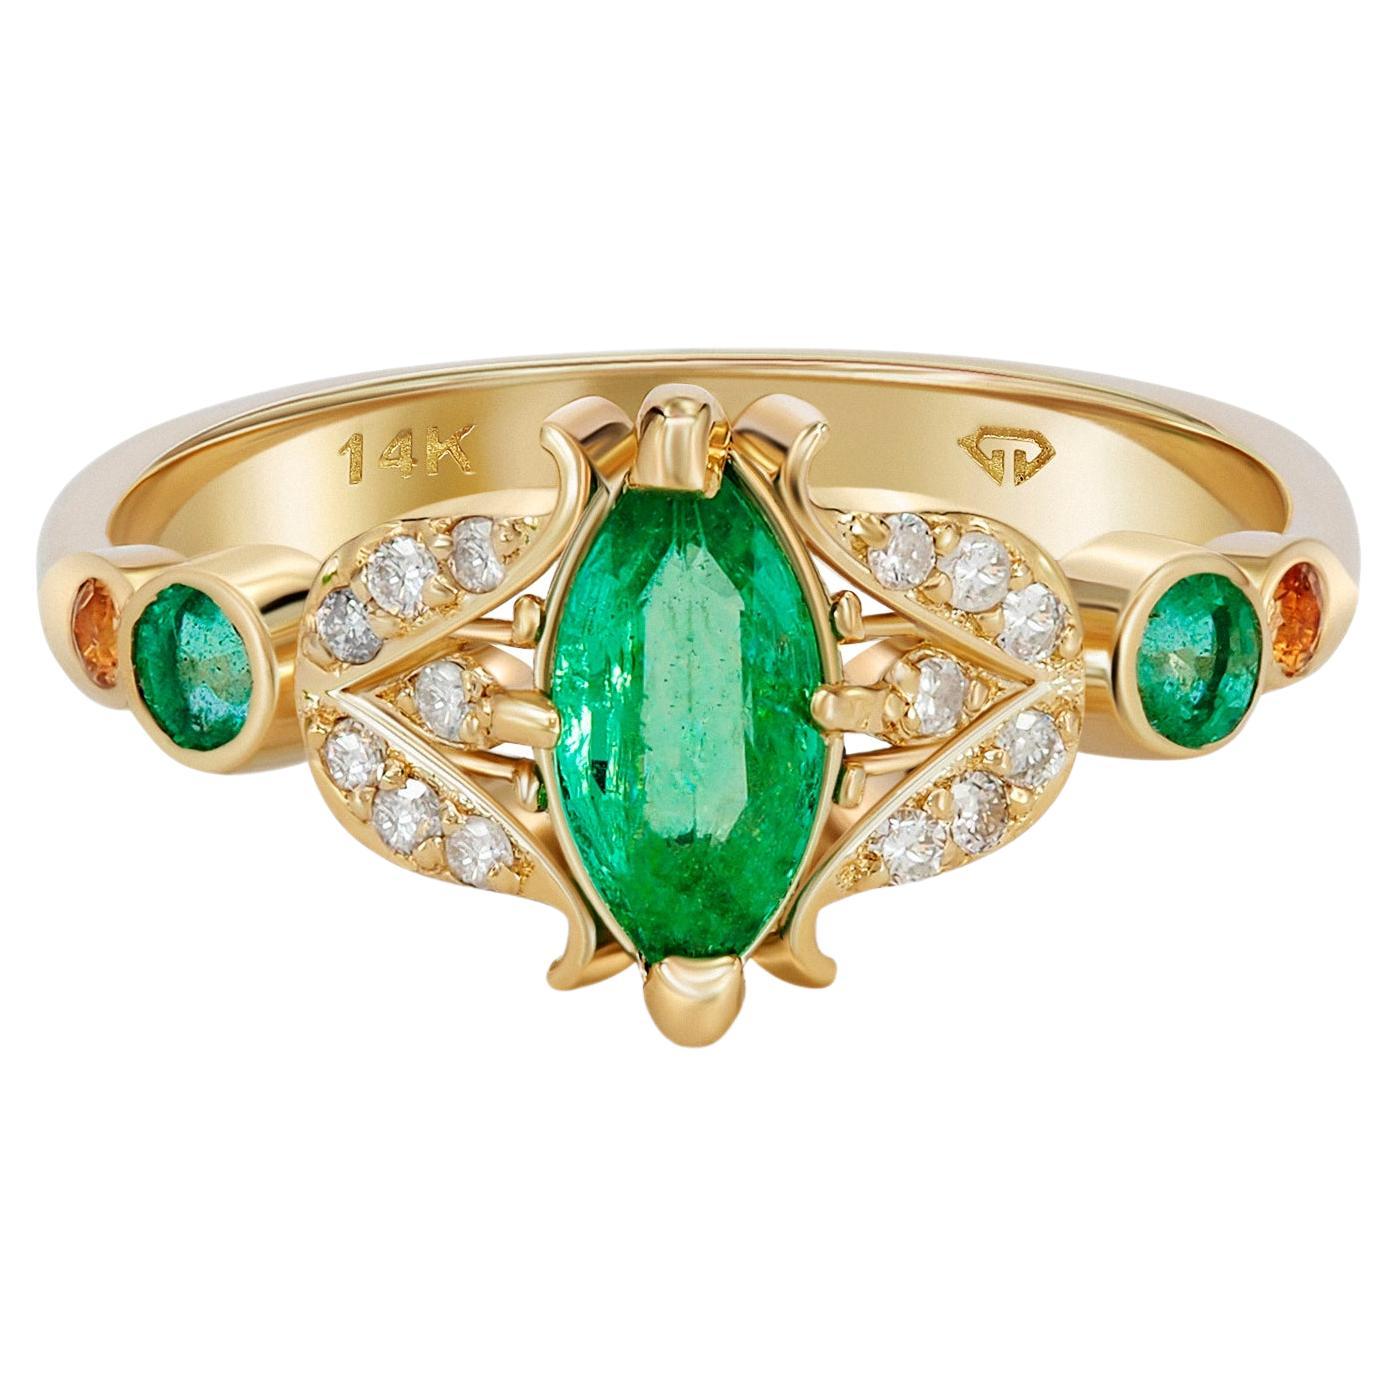 Vintage-Ring mit Smaragd. 